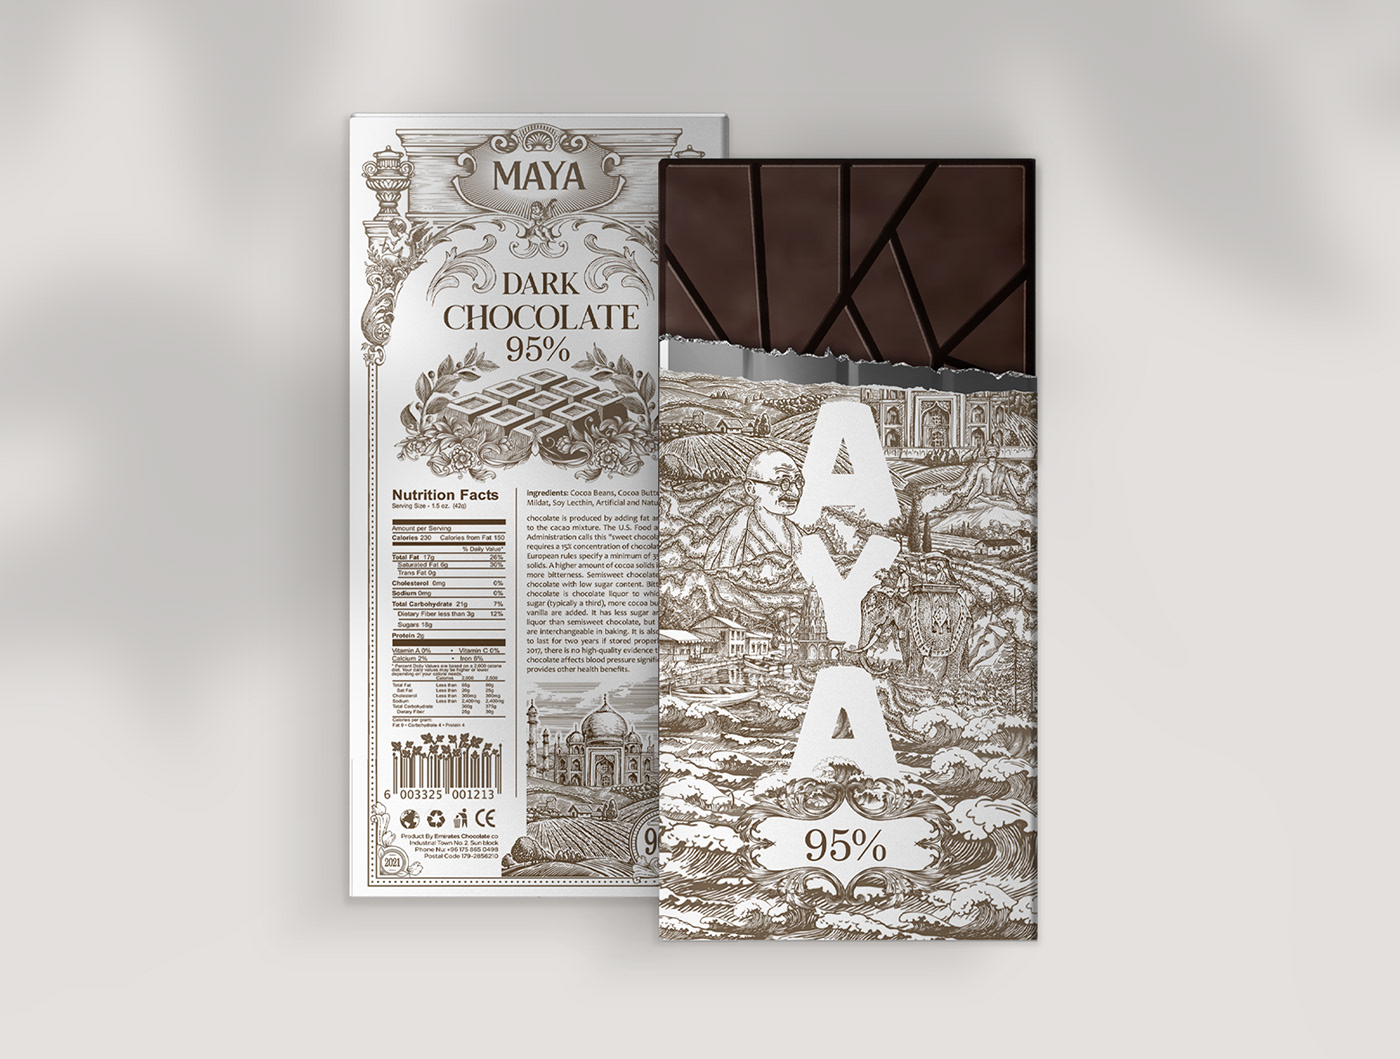 bar chocolate chocolate bar Cocoa dark dark chocolate Drawing  egypt Packaging snack bar